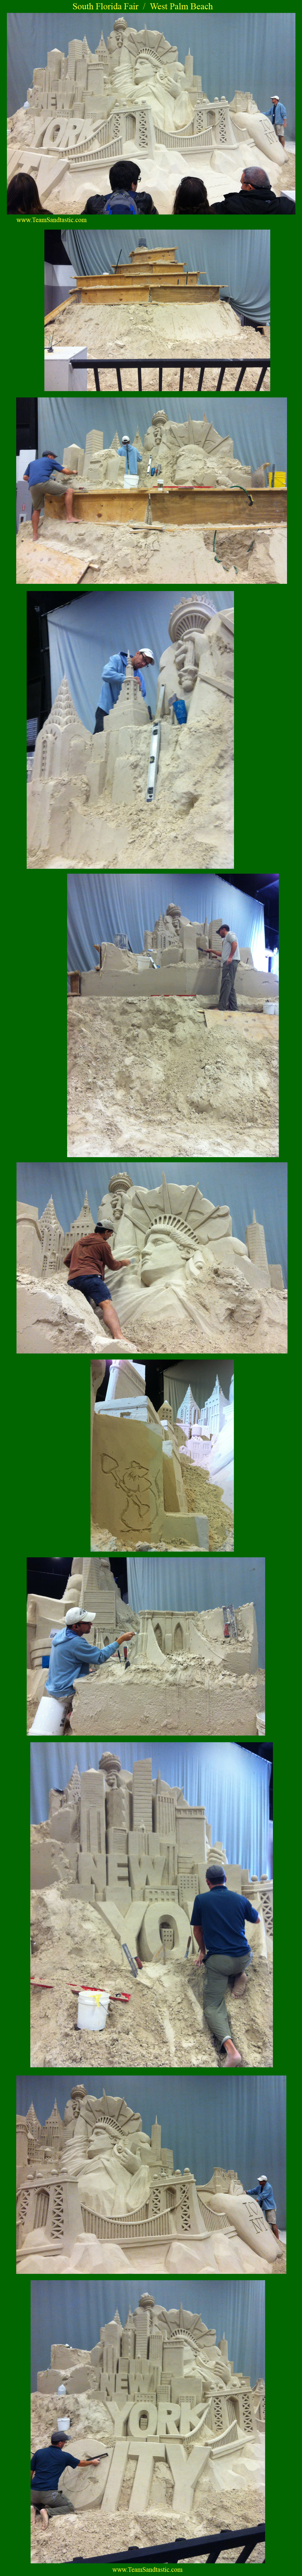 New York City Sand Sculpture